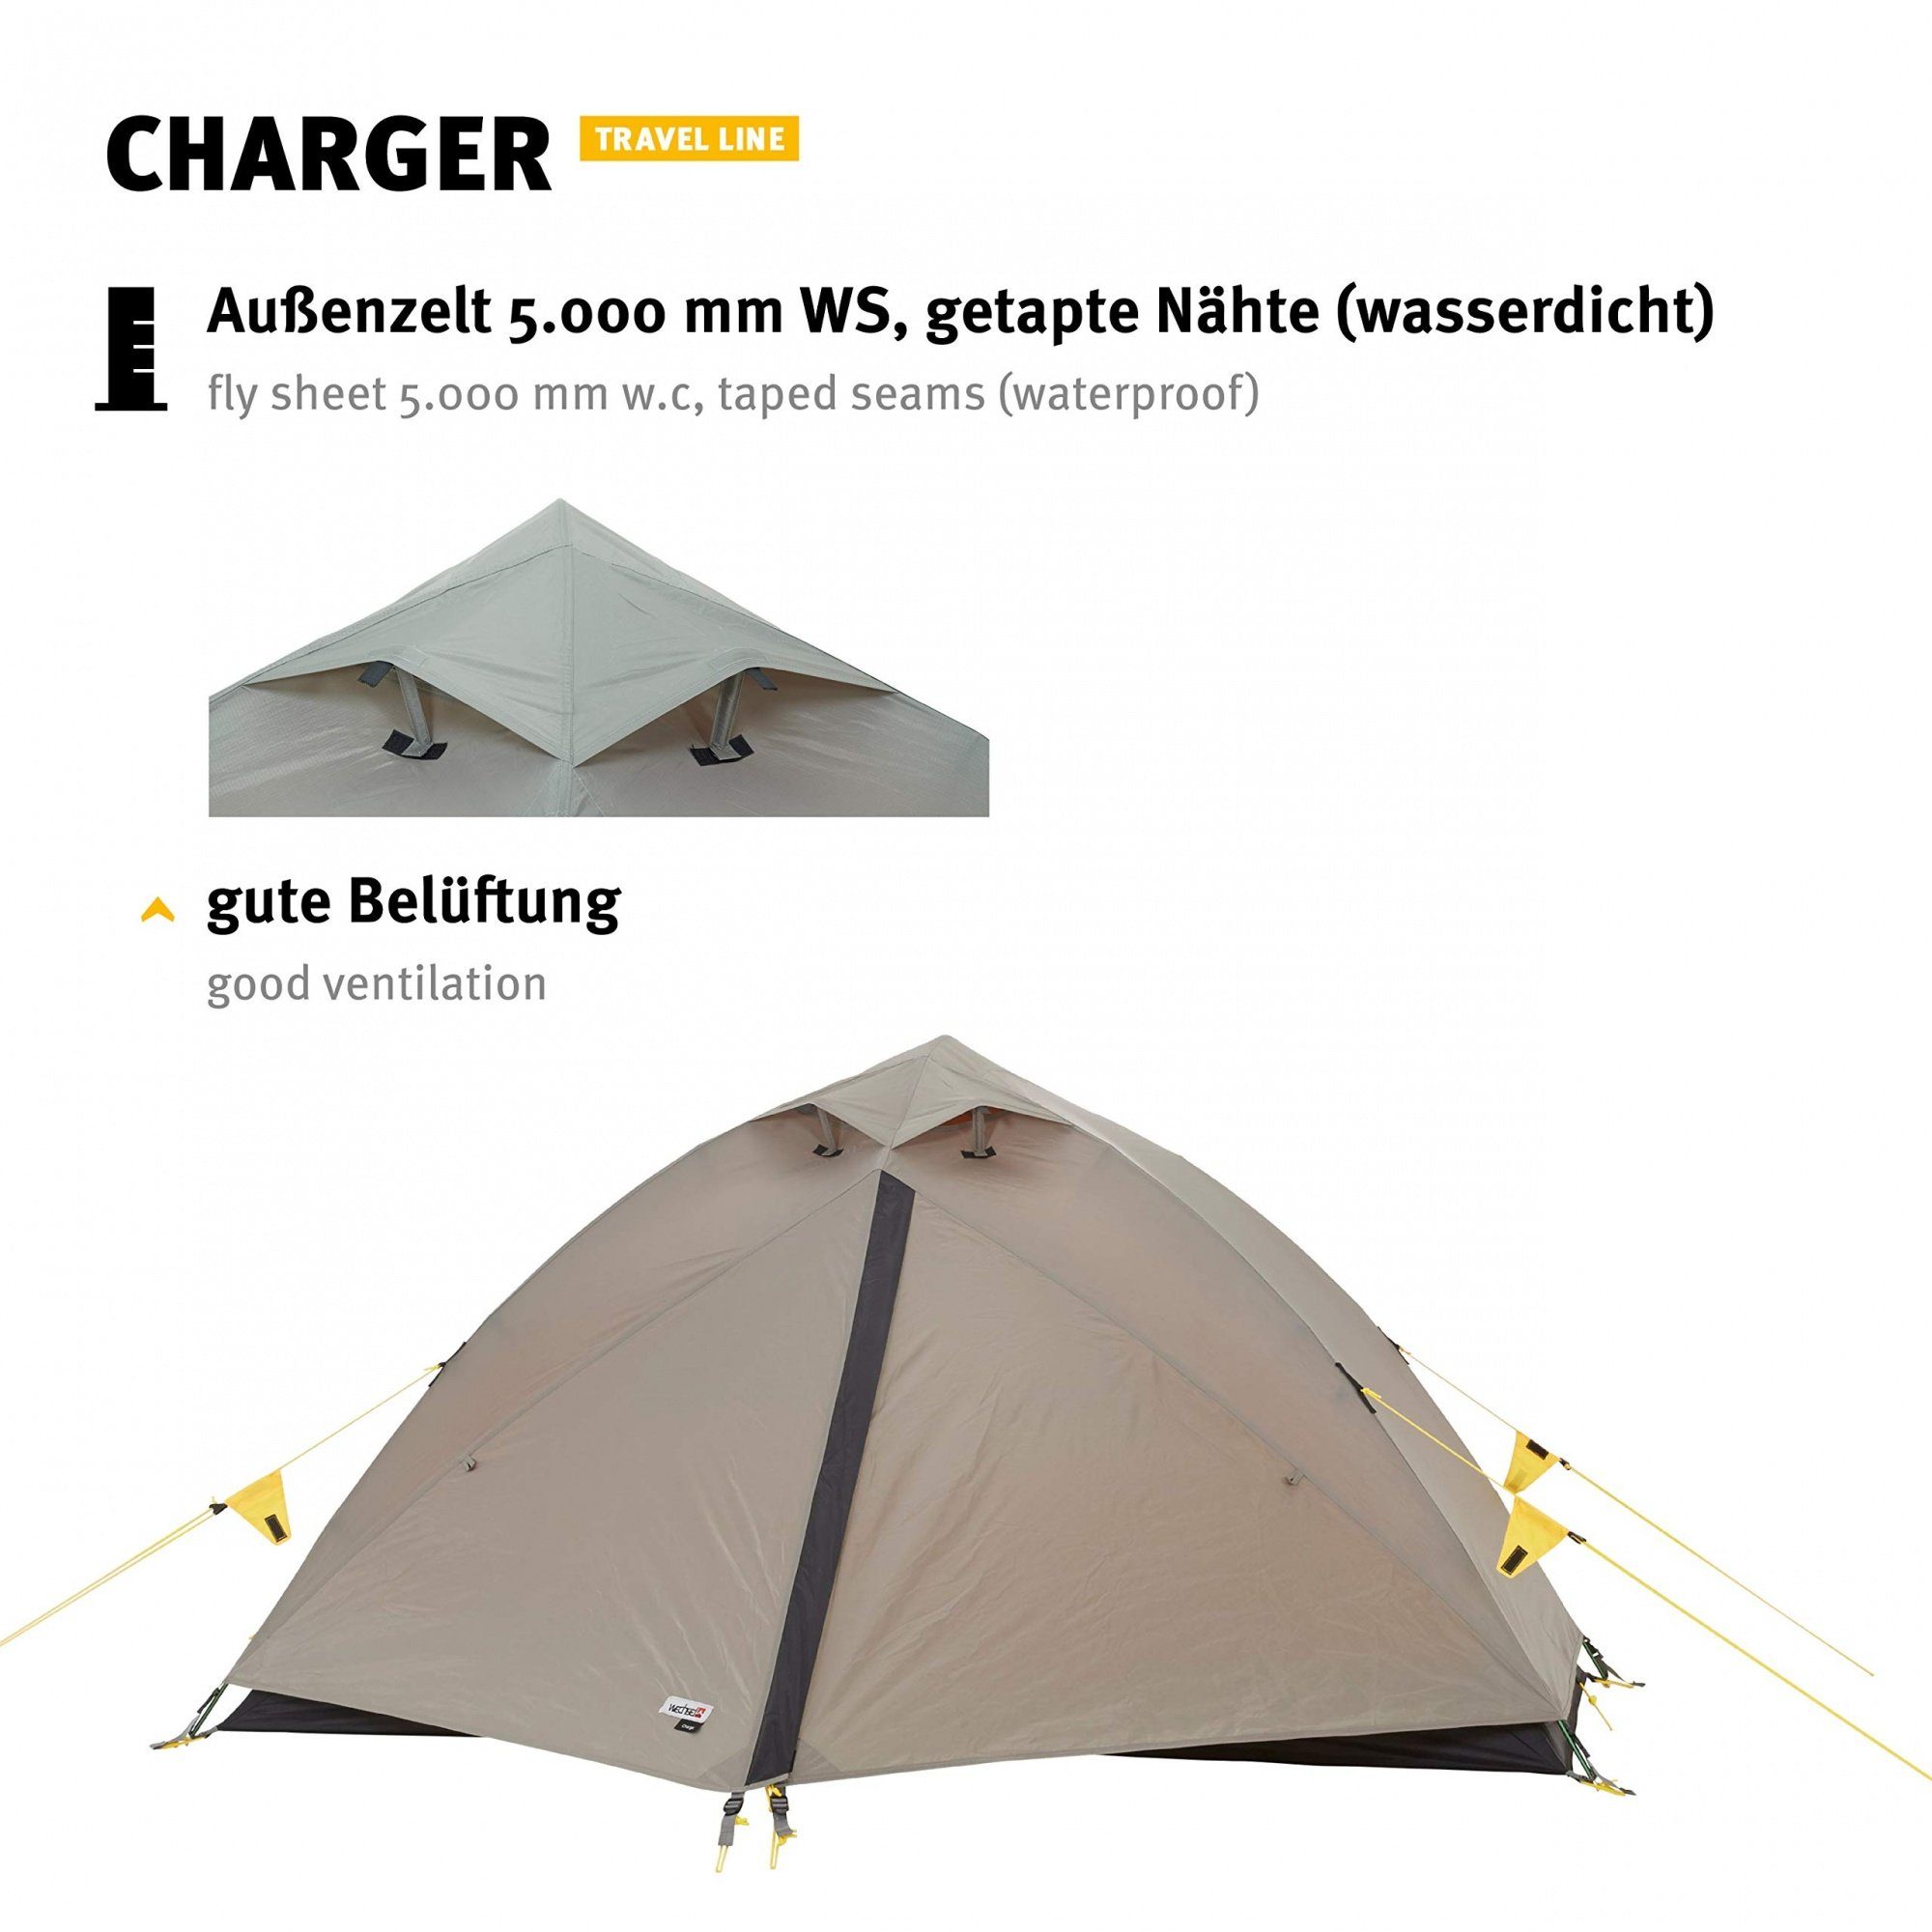 Zelt, Vielseitiges Line Personen: Kuppelzelt Kuppelzelt - 2 Geodät Charger Tents Travel Wechsel - 2-Personen